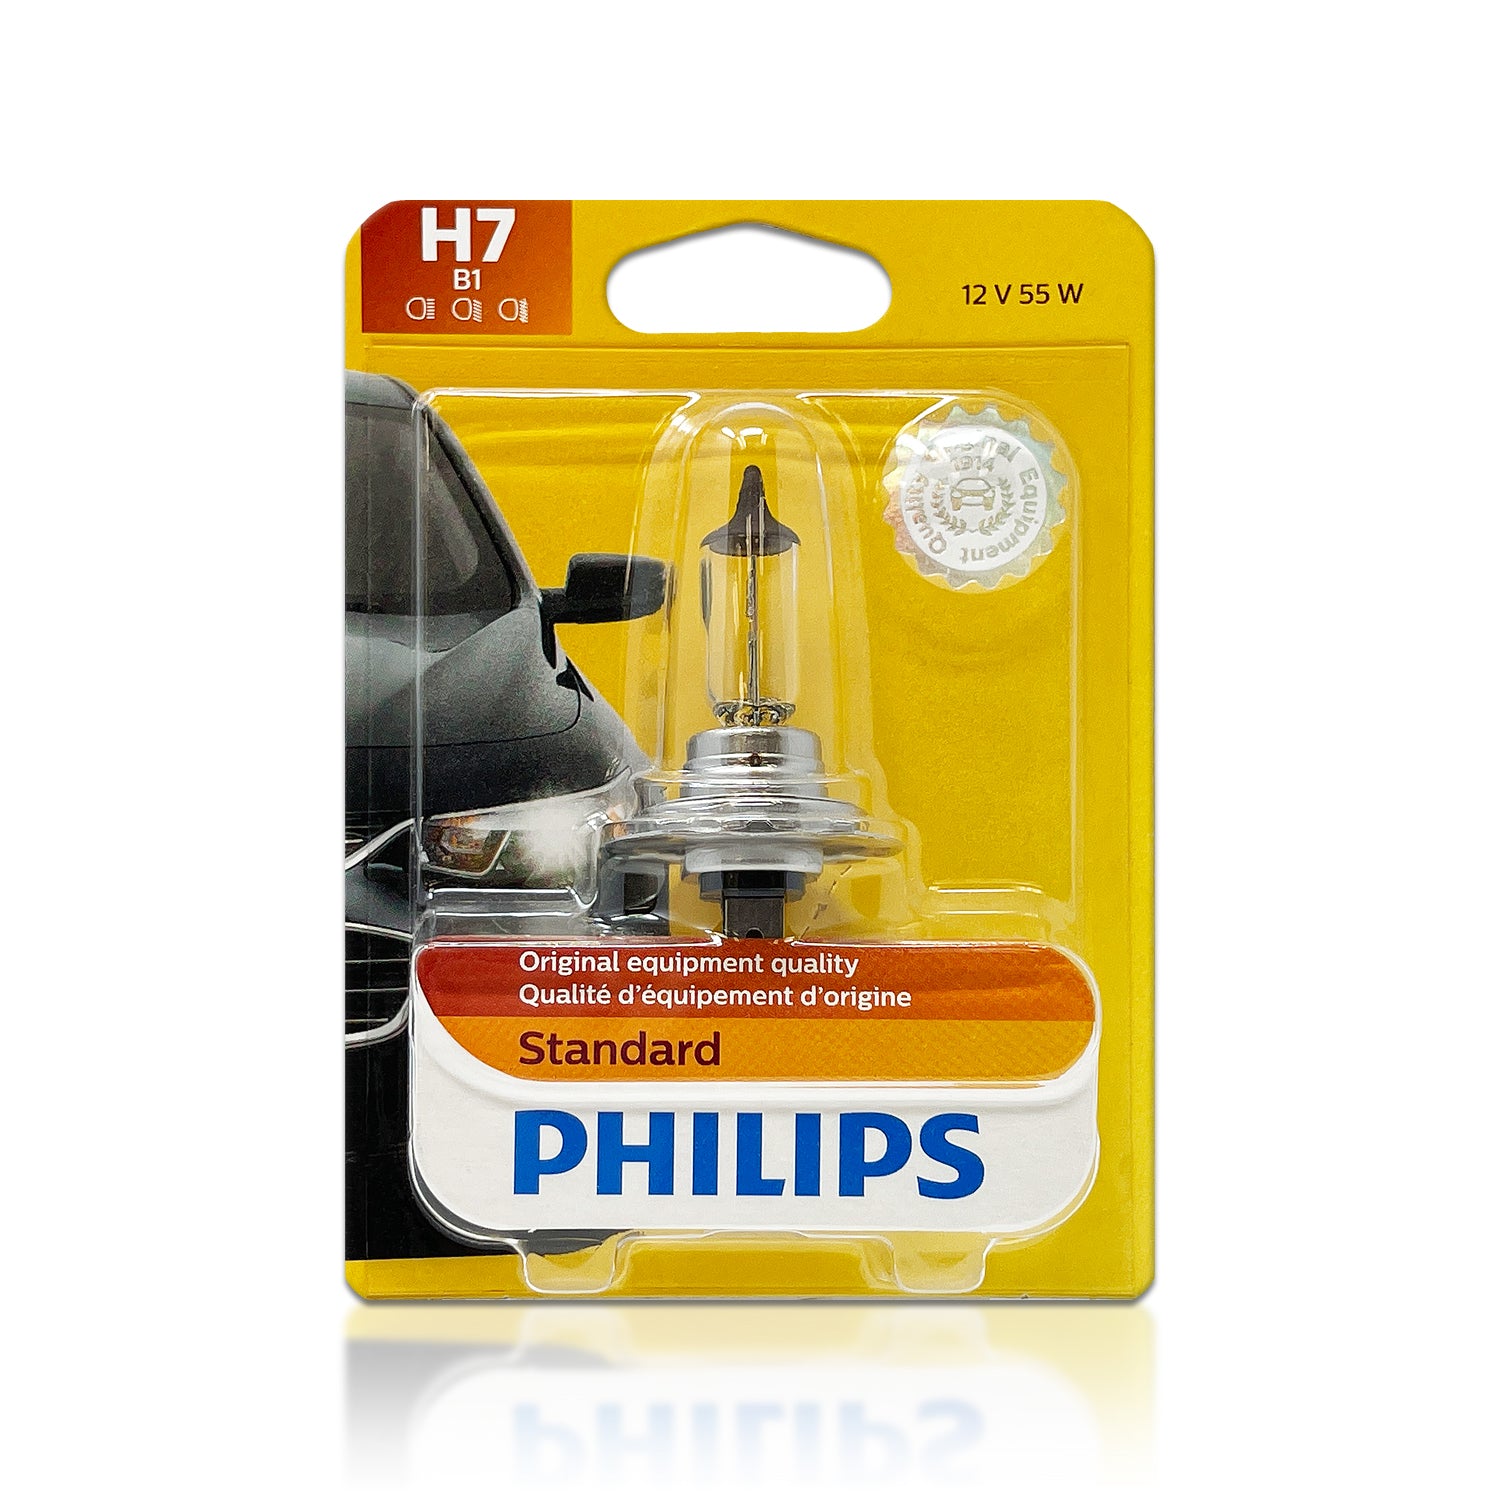 Philips Standard Headlight H7, Pack of 1 - H7B1